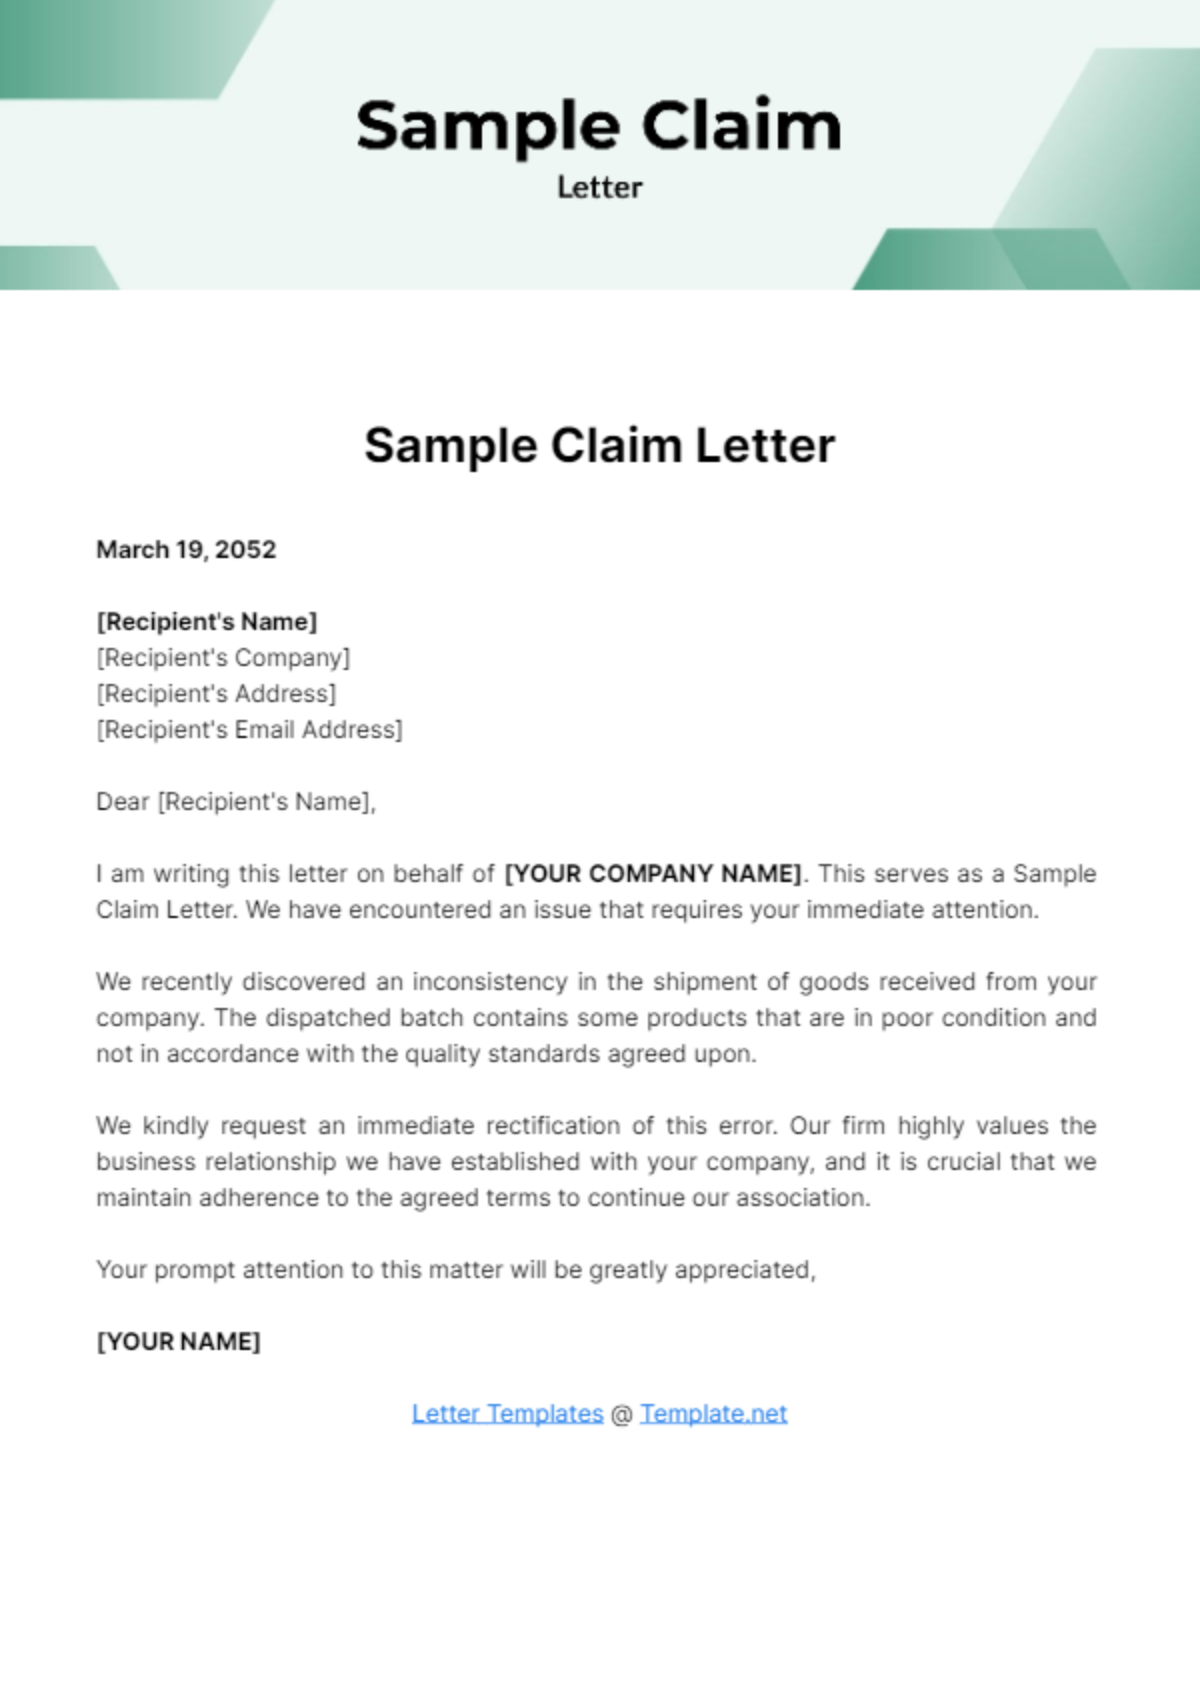 Sample Claim Letter Template